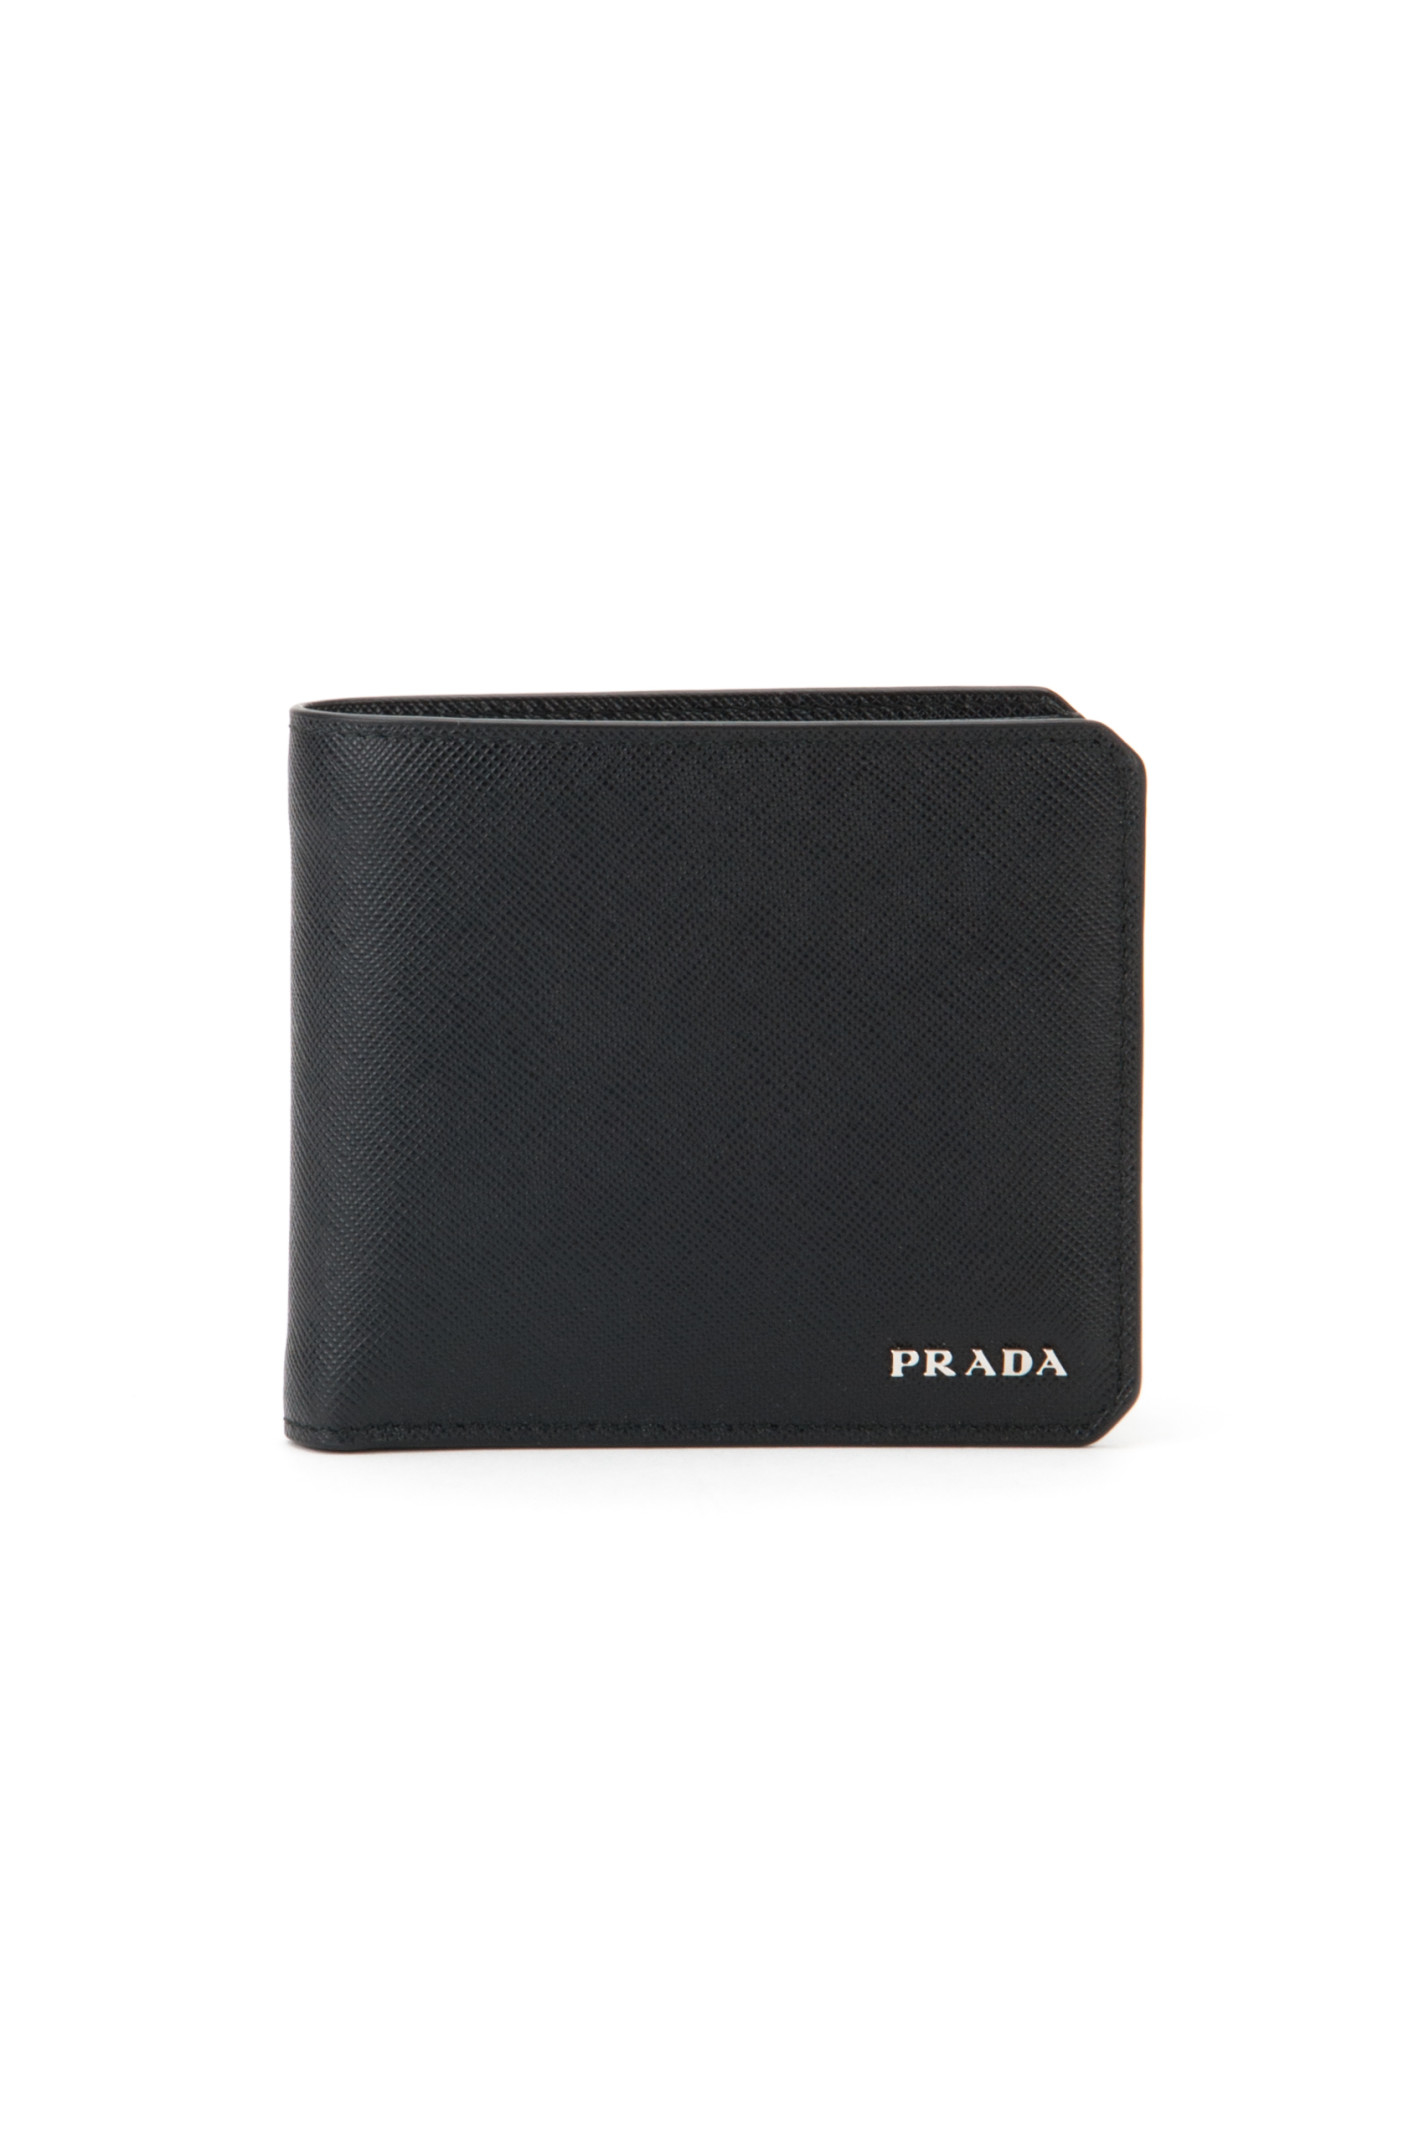 Prada Saffiano Corner Wallet in Black for Men (NERO) | Lyst  